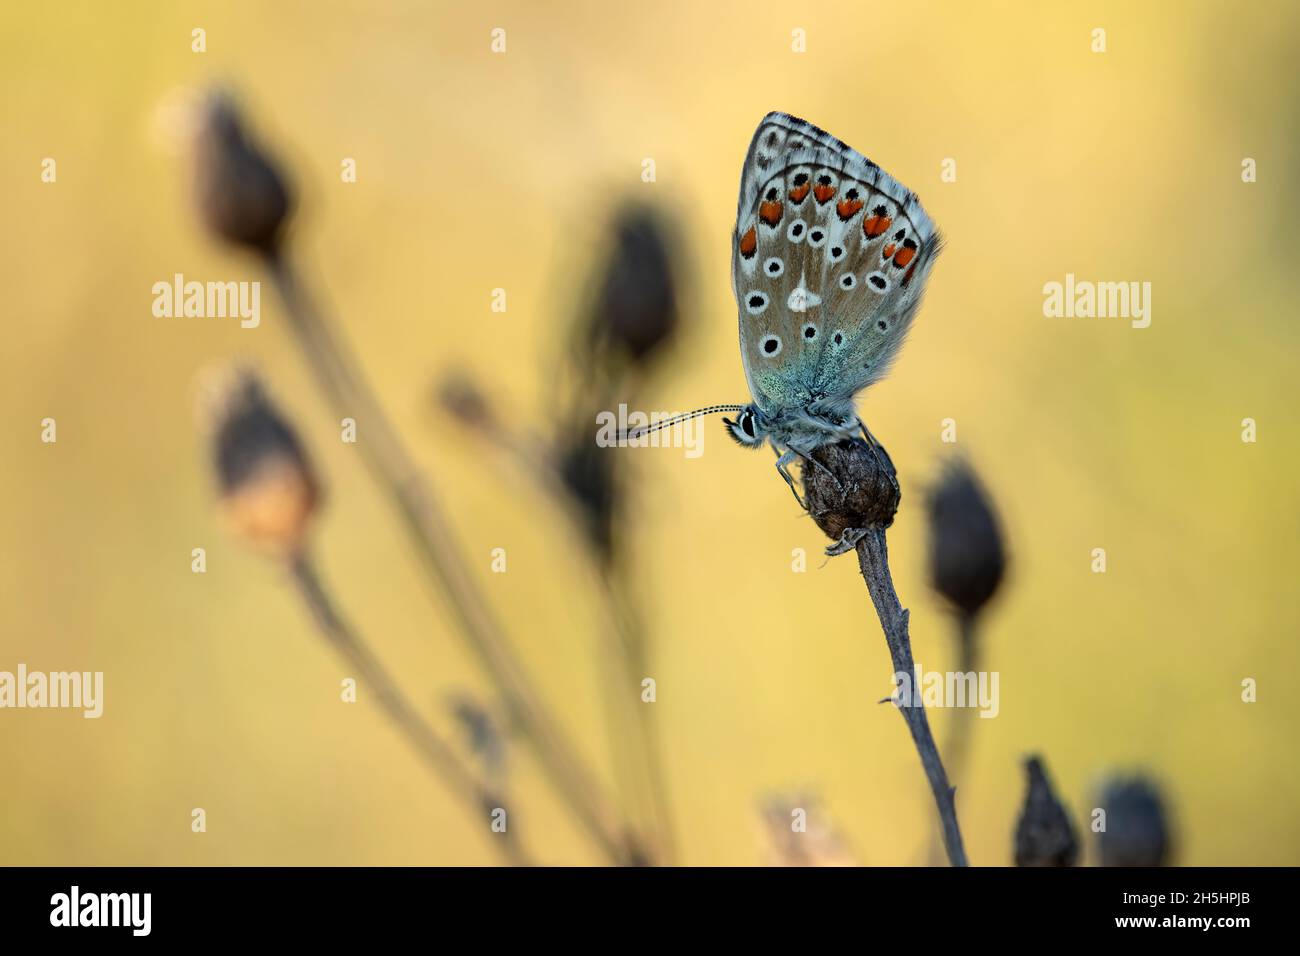 Bläuling,Schweiz,Nature,Insekt,Schmetterling *** Local Caption *** Blue,  Moth,  Buttertfly,  Nature,  Insect,  Switzerland, Stock Photo